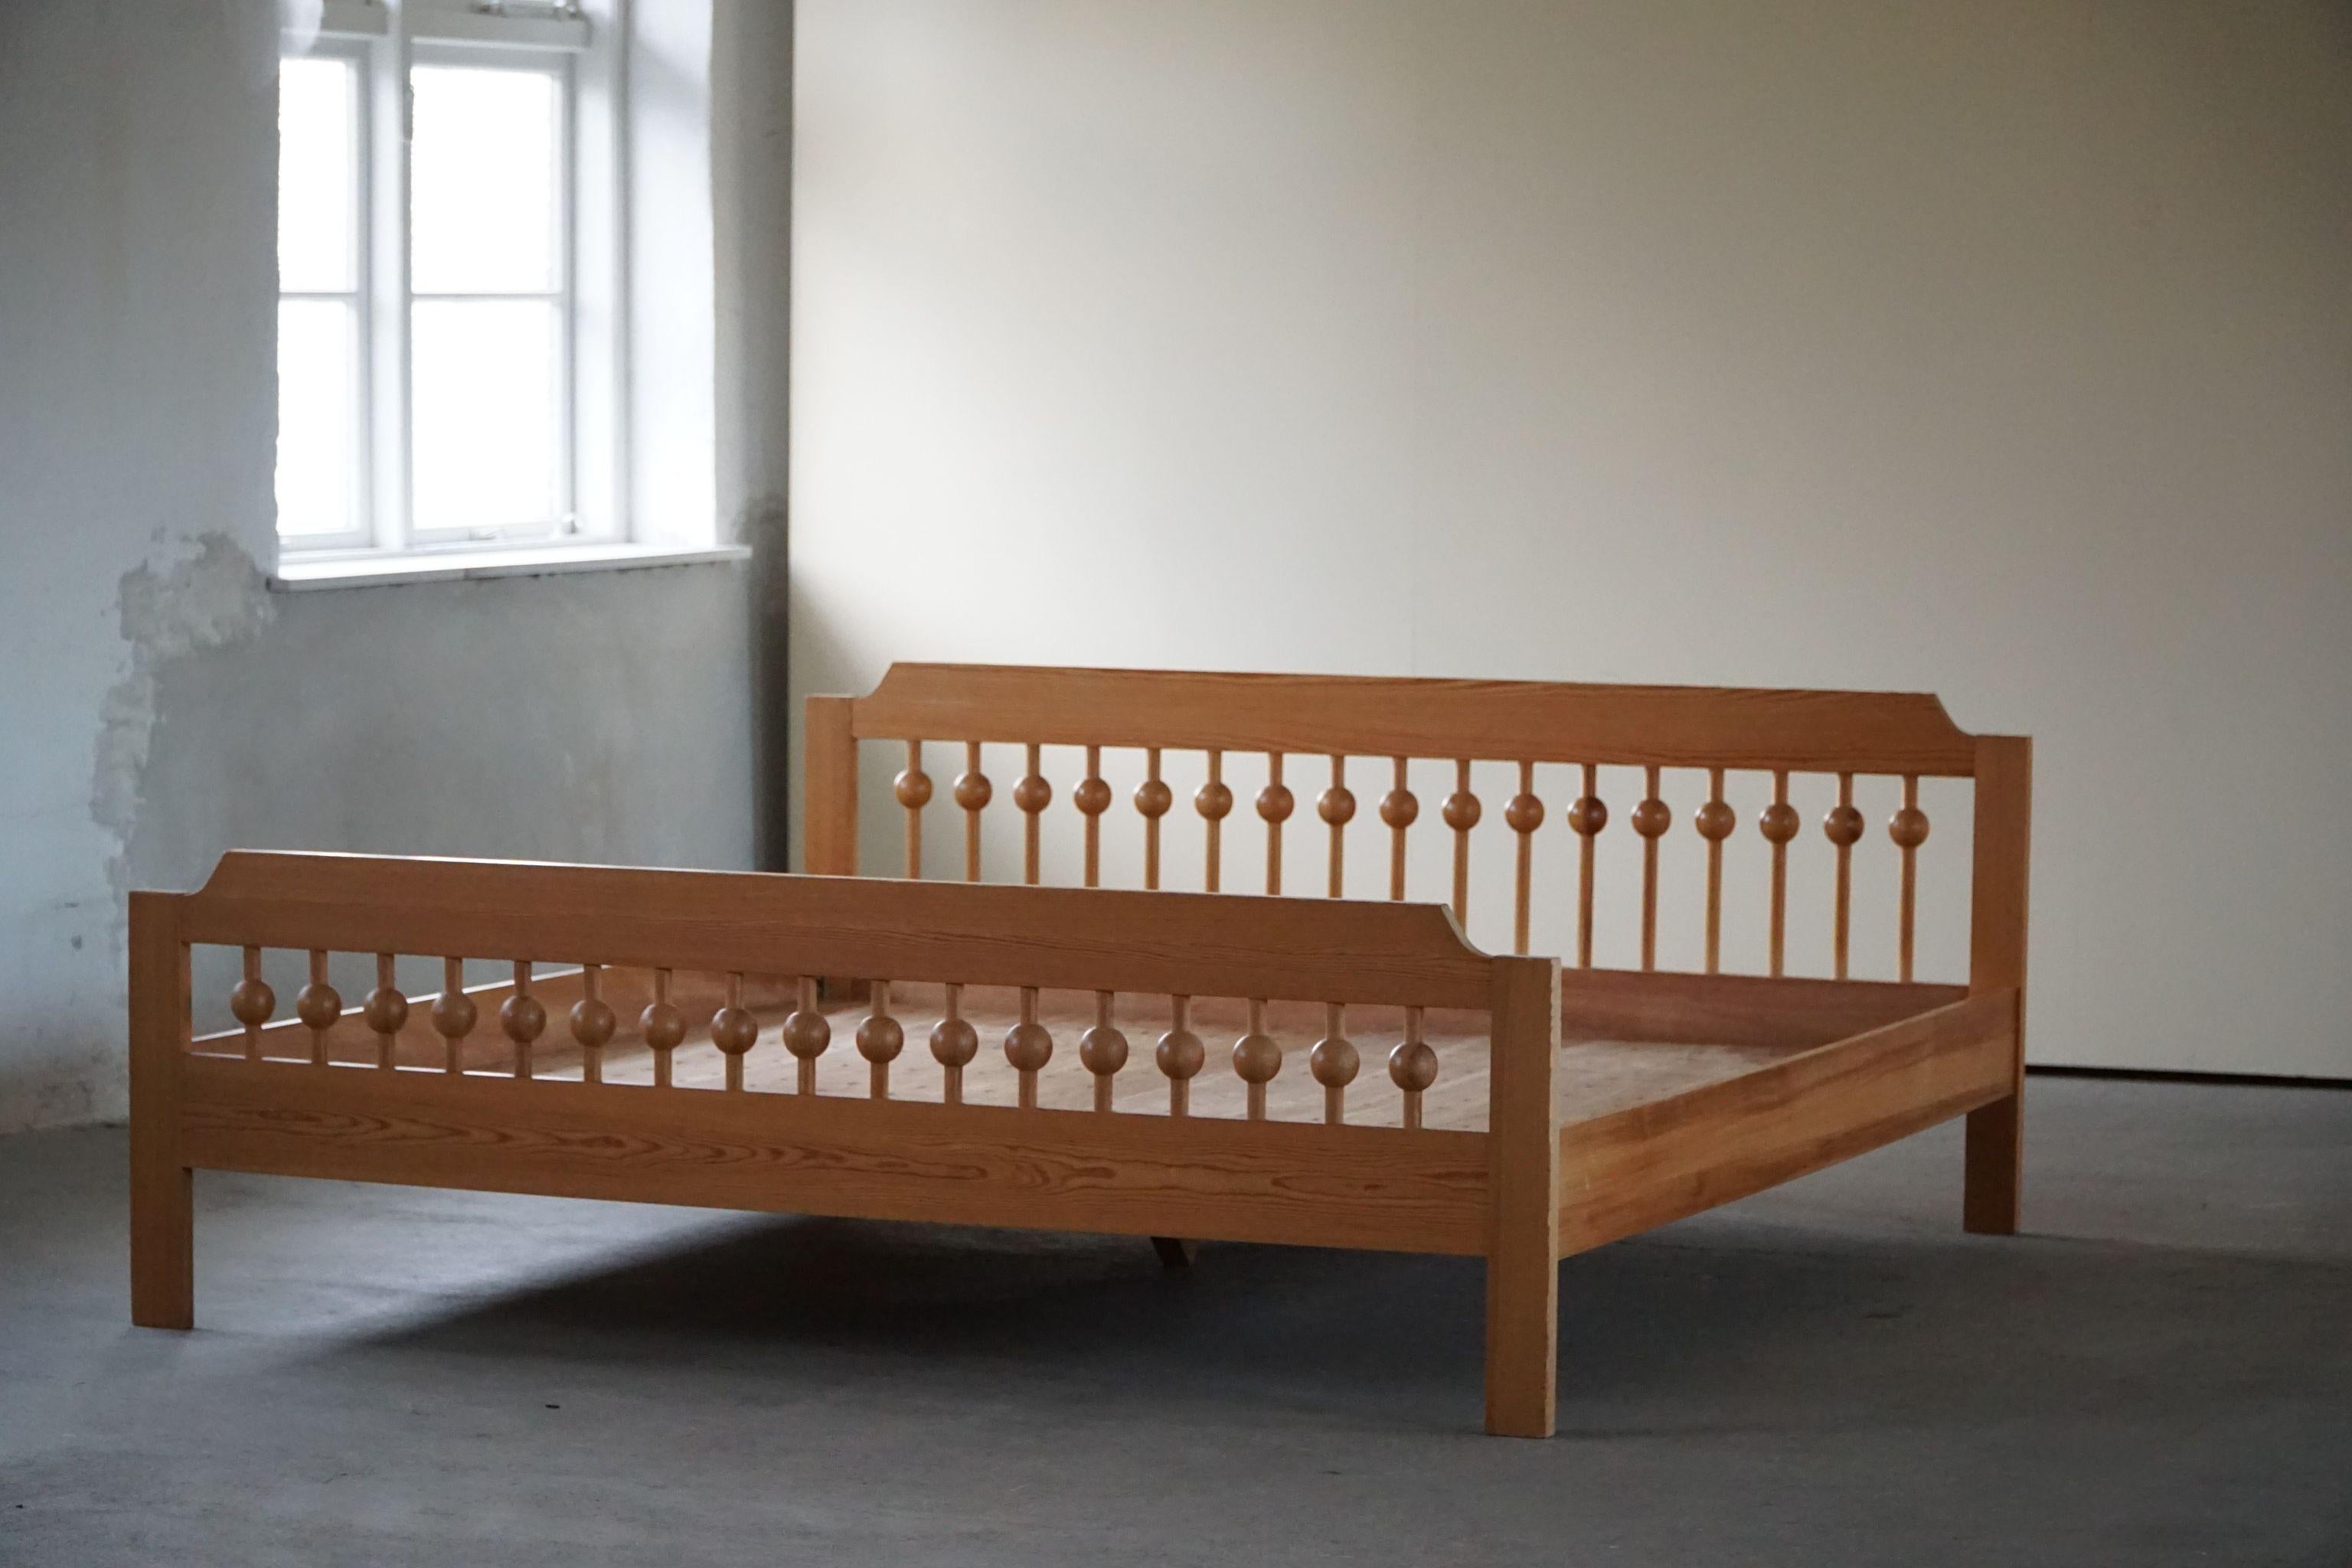 Brutalist Swedish Modern Sculptural Bed in Pine, Made by Sven Larsson, 1960s For Sale